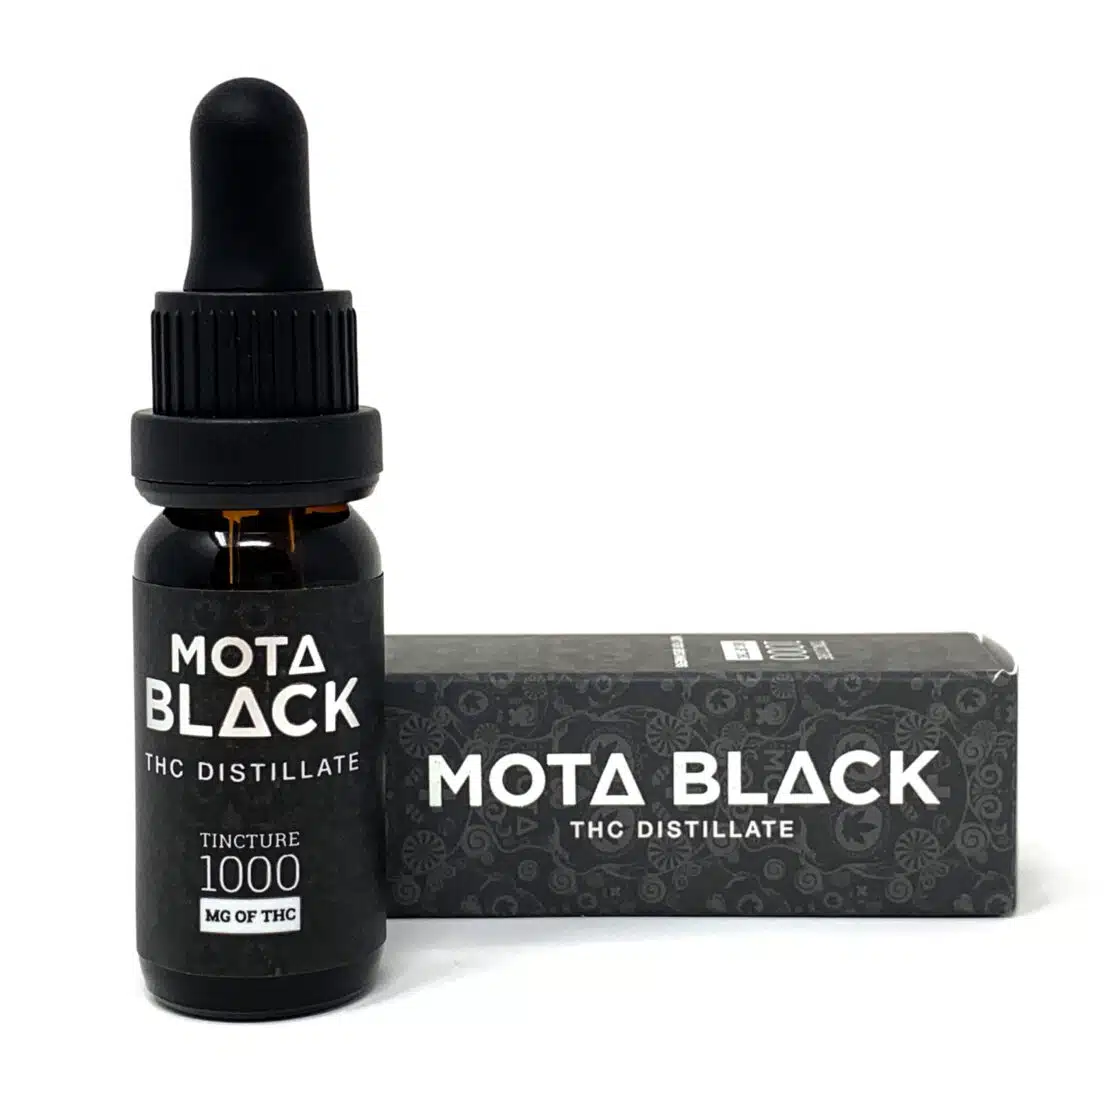 Mota Black – Tincture – Thc Distillate